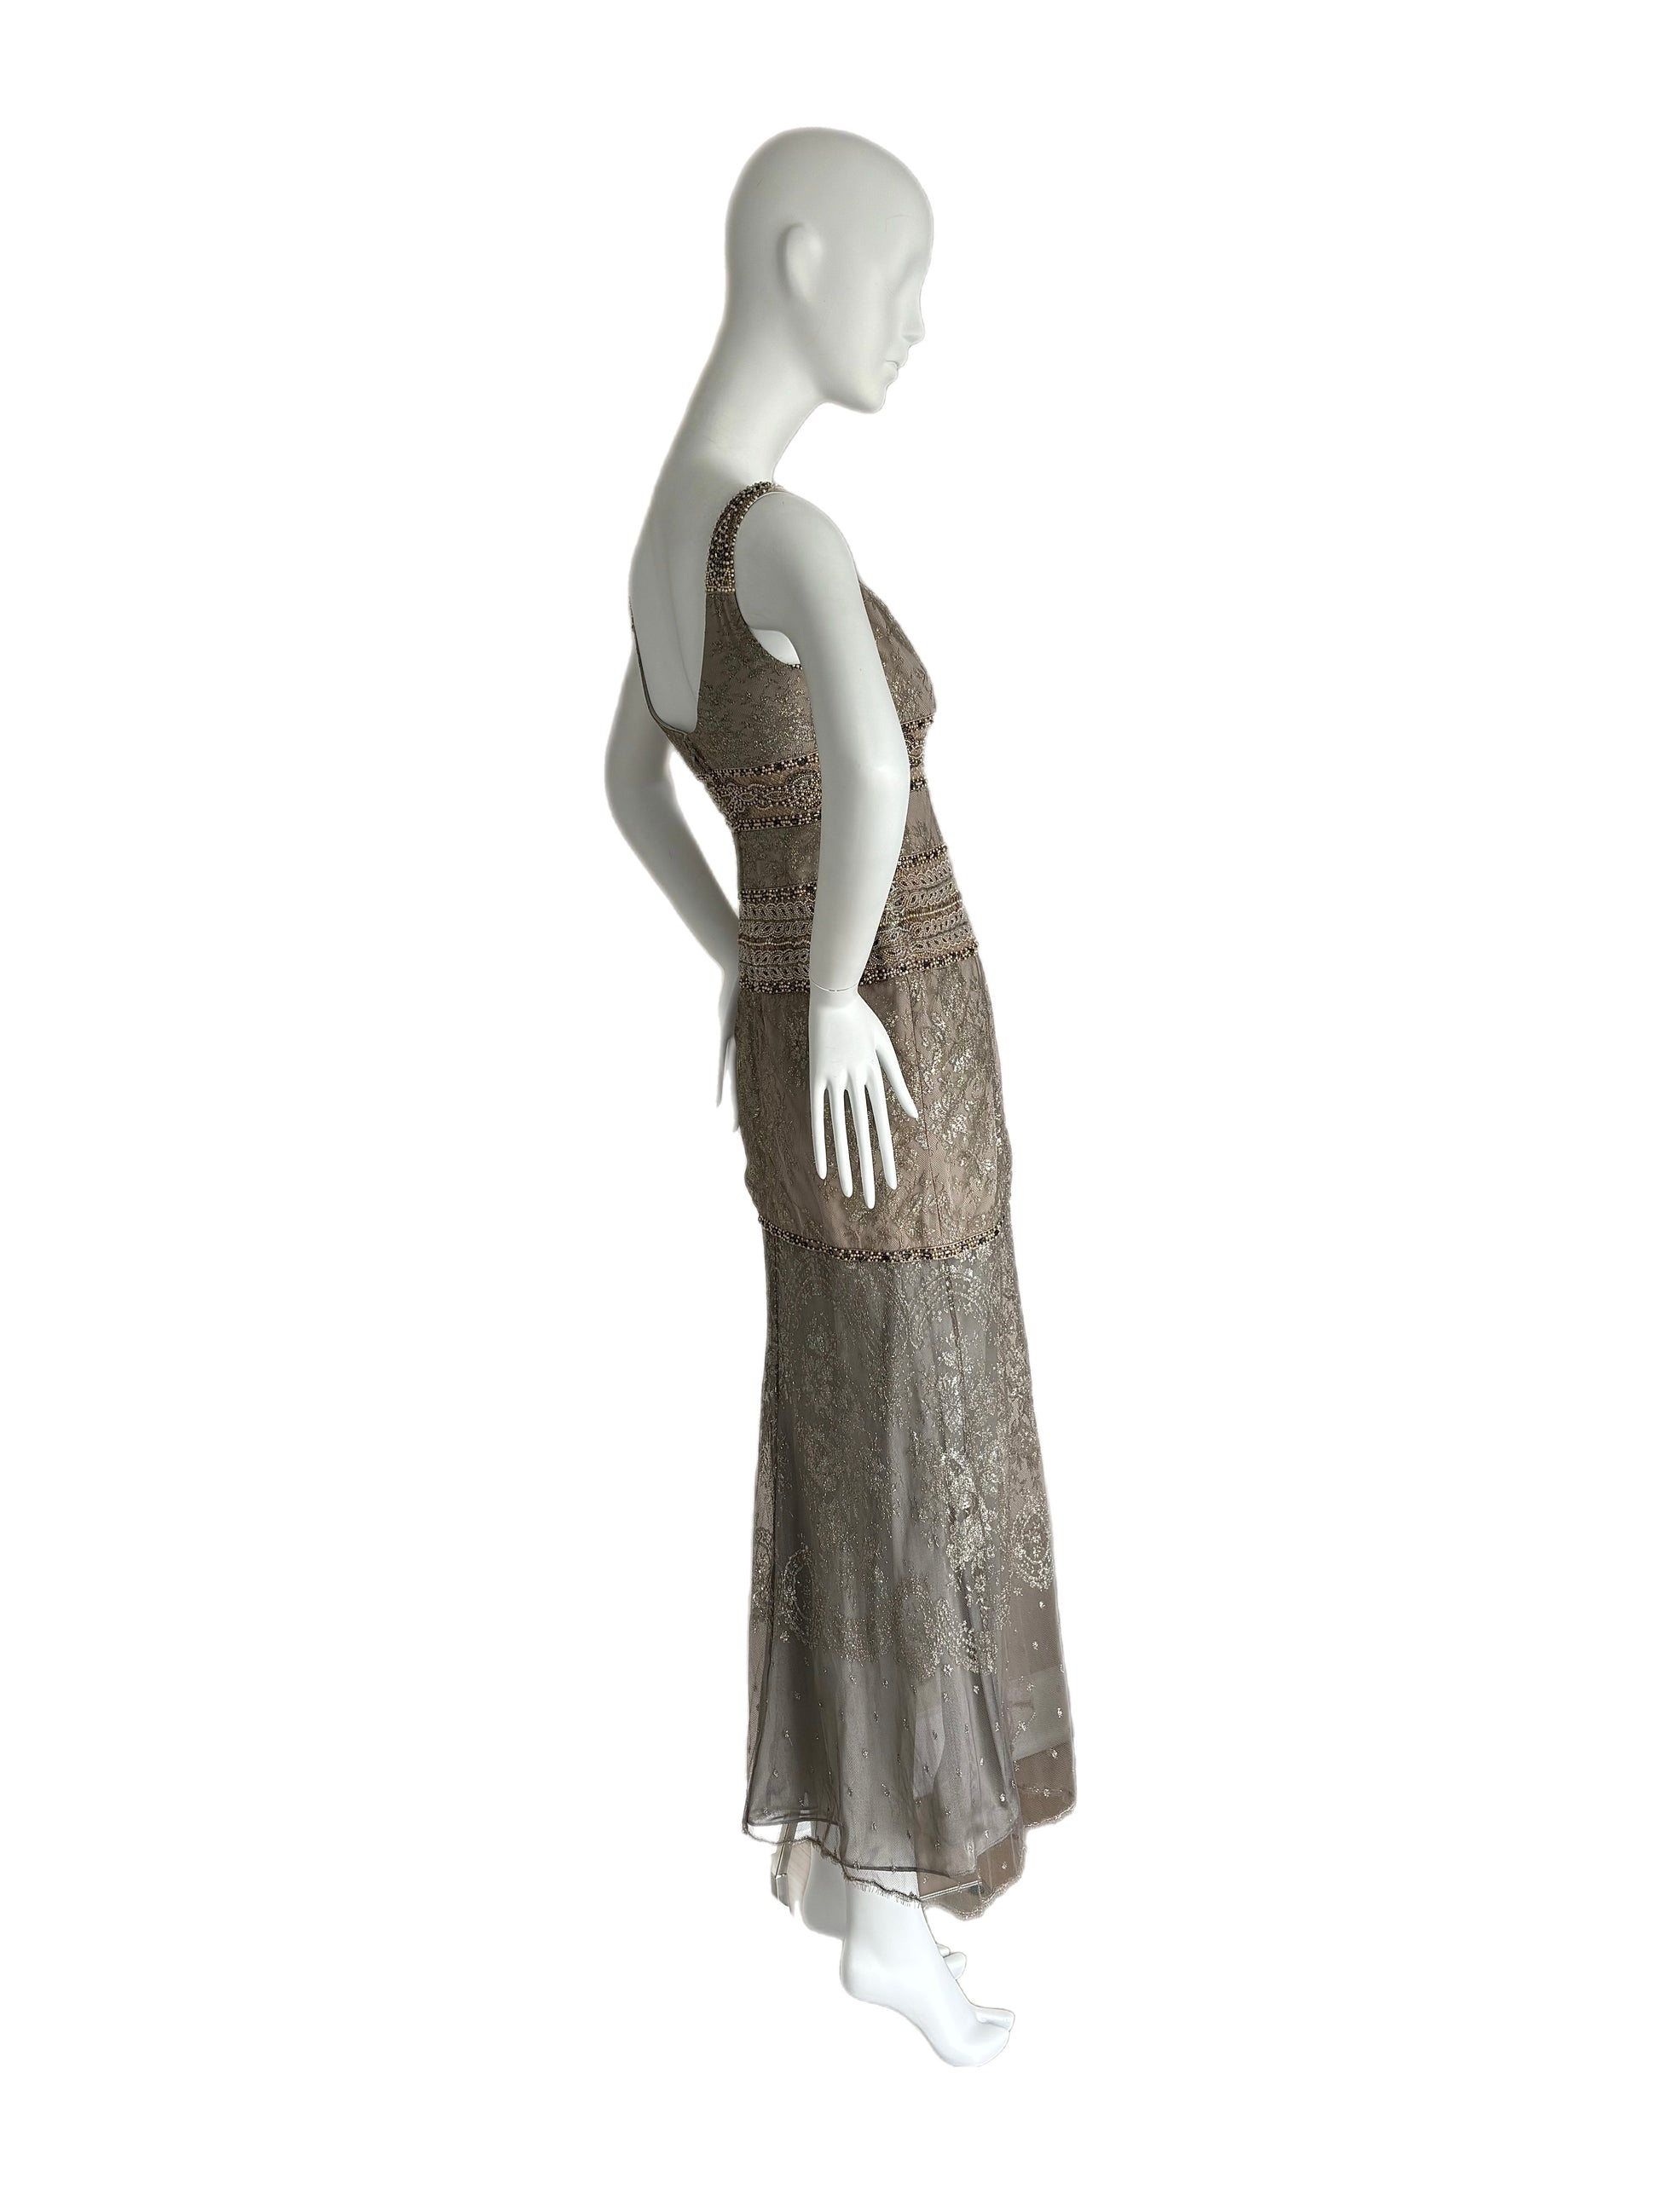 BADGLEY MISCHKA 1996 vintage runway dress maxi gown